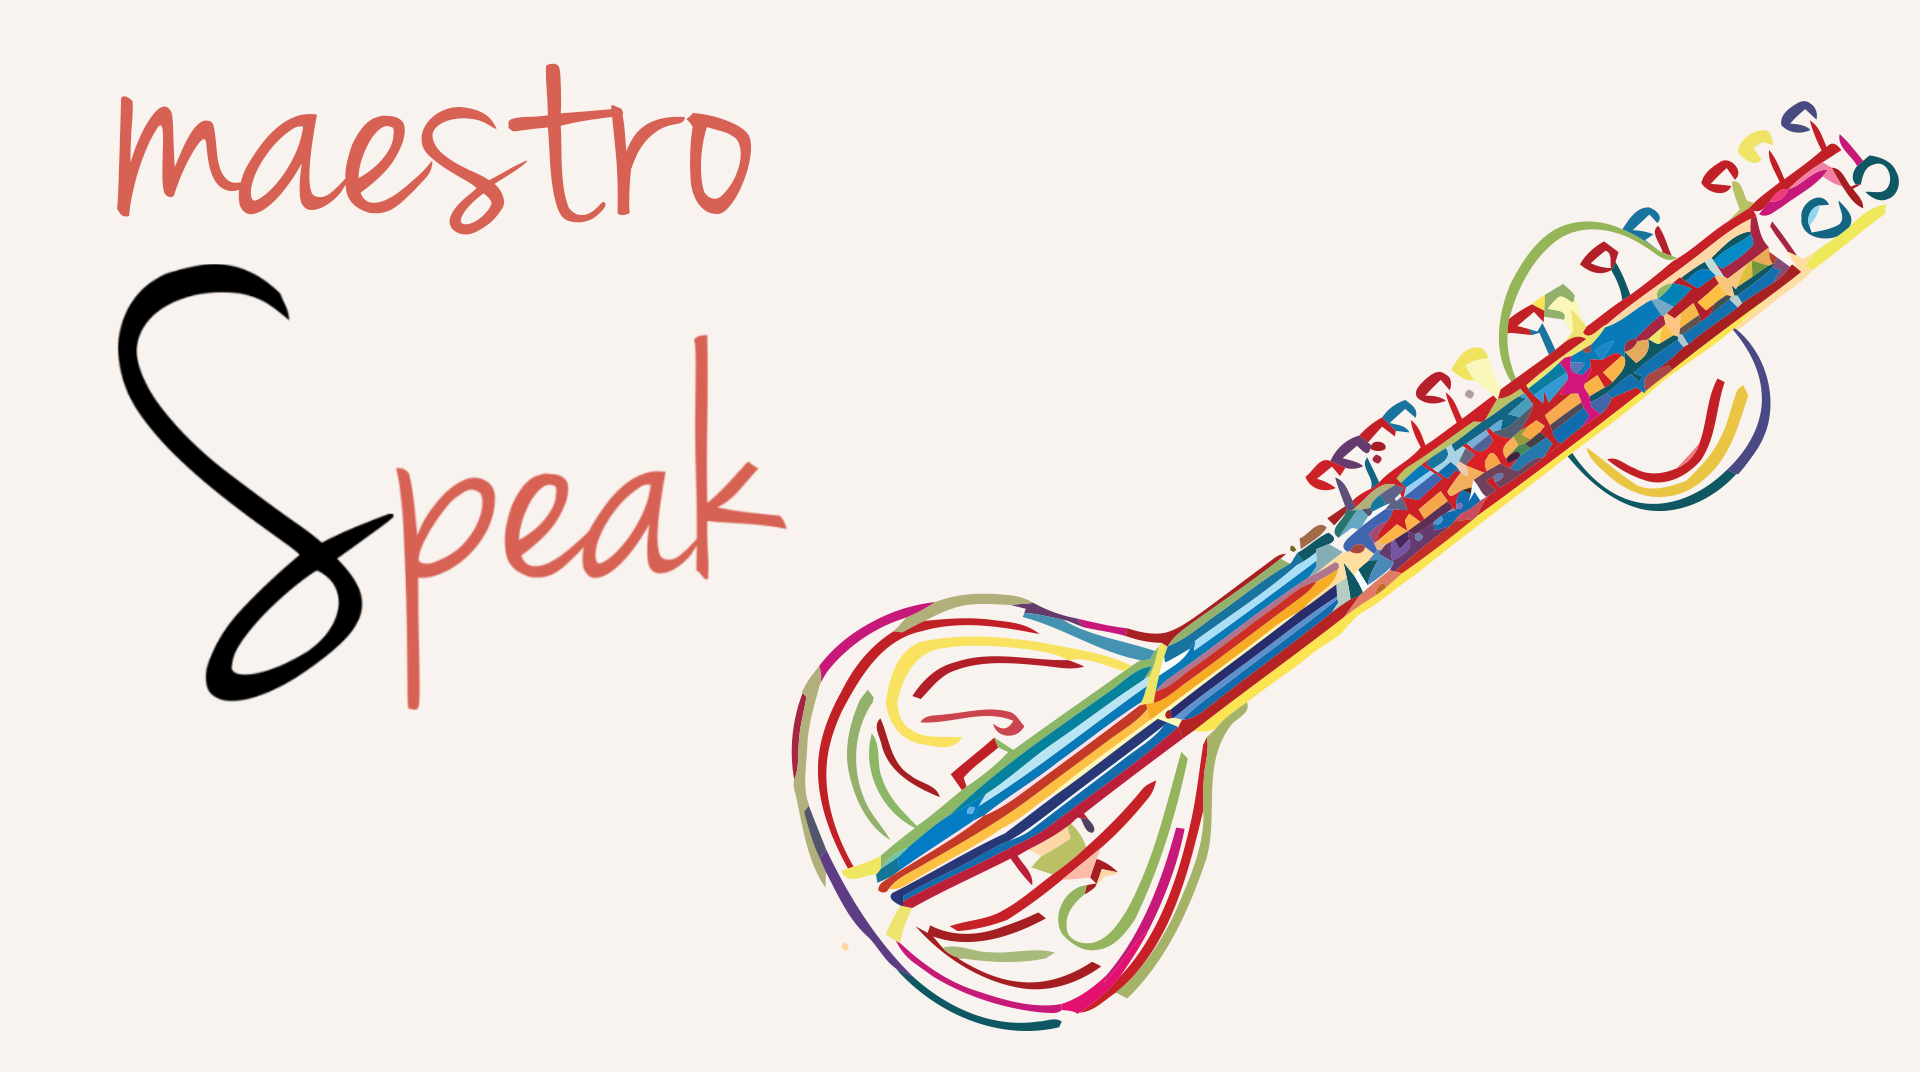 Maestro-speak - Arun Kashalkar